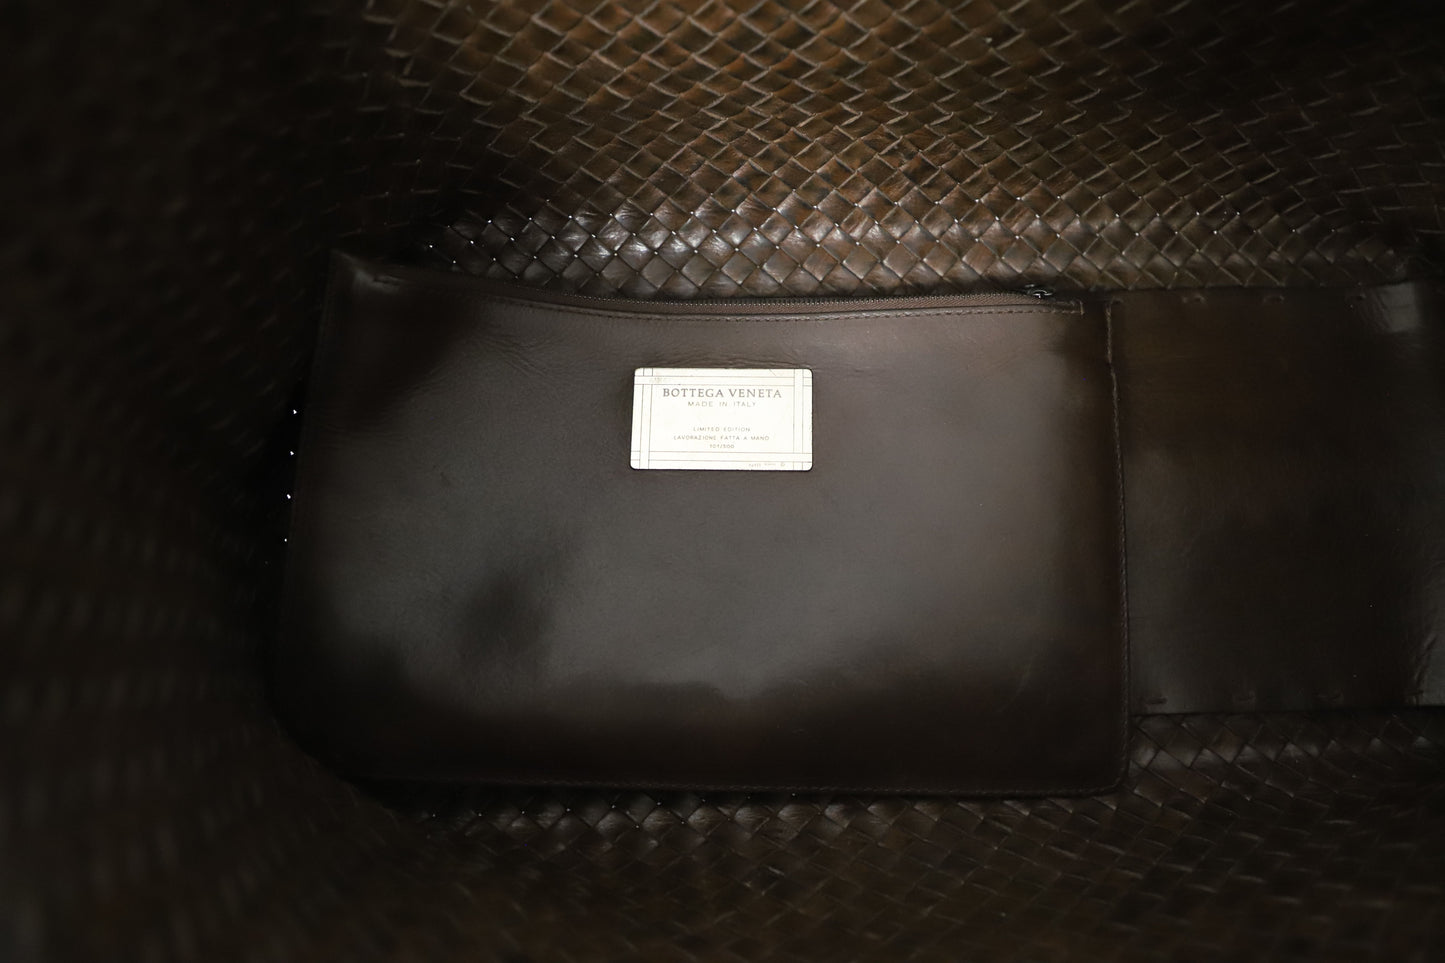 Bottega Veneta Intrecciato Cabat Tote Bag in Brown Nappa Calf Leather